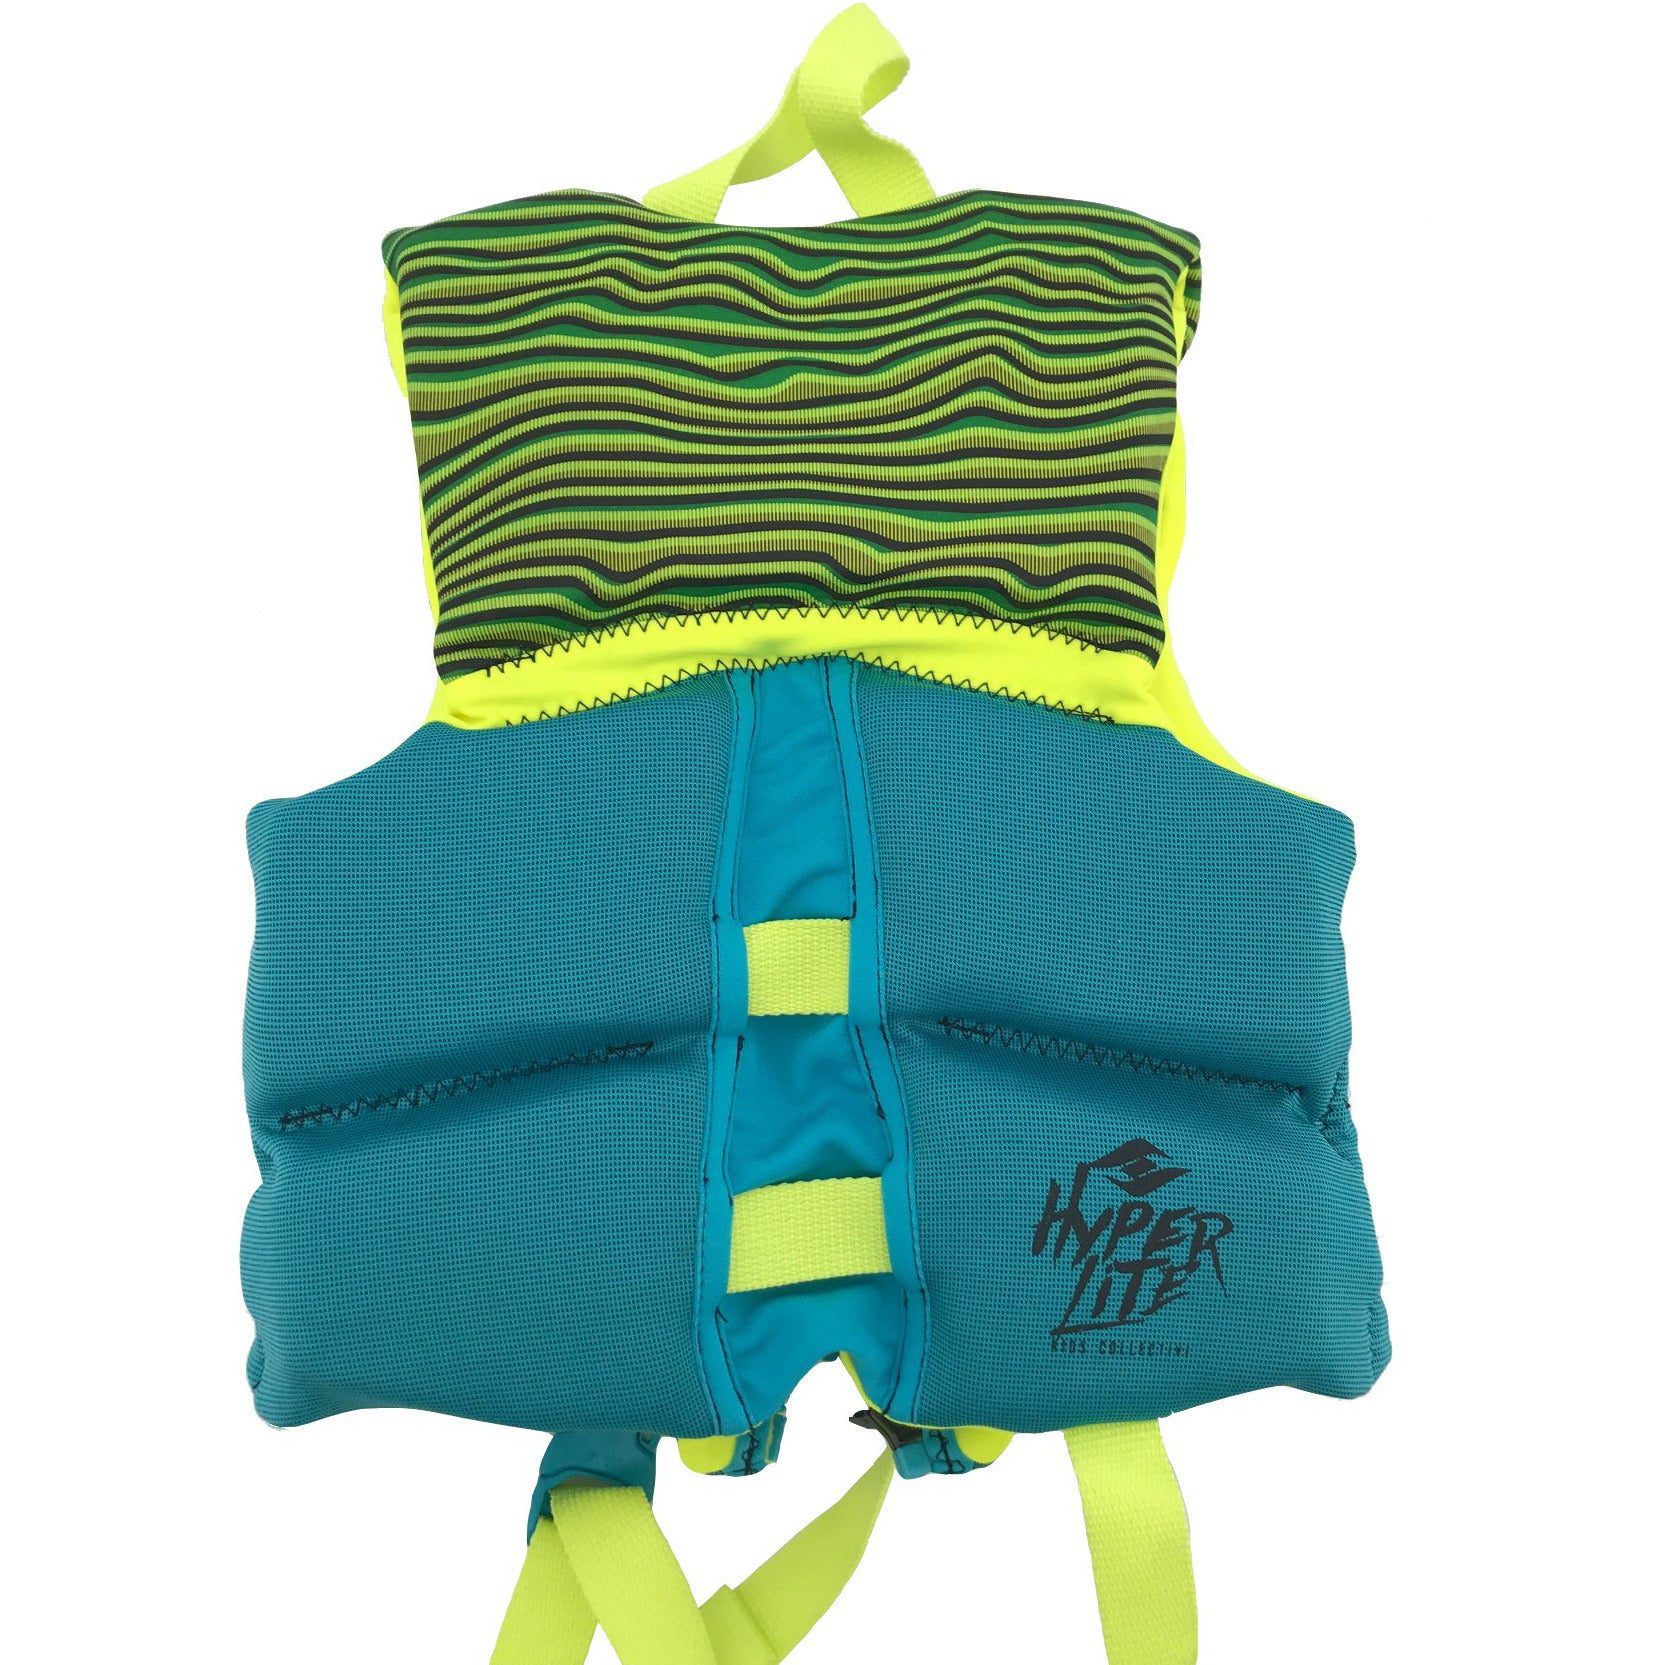 Hyperlite kids watersport vest and flotation device for children 33-55lbs